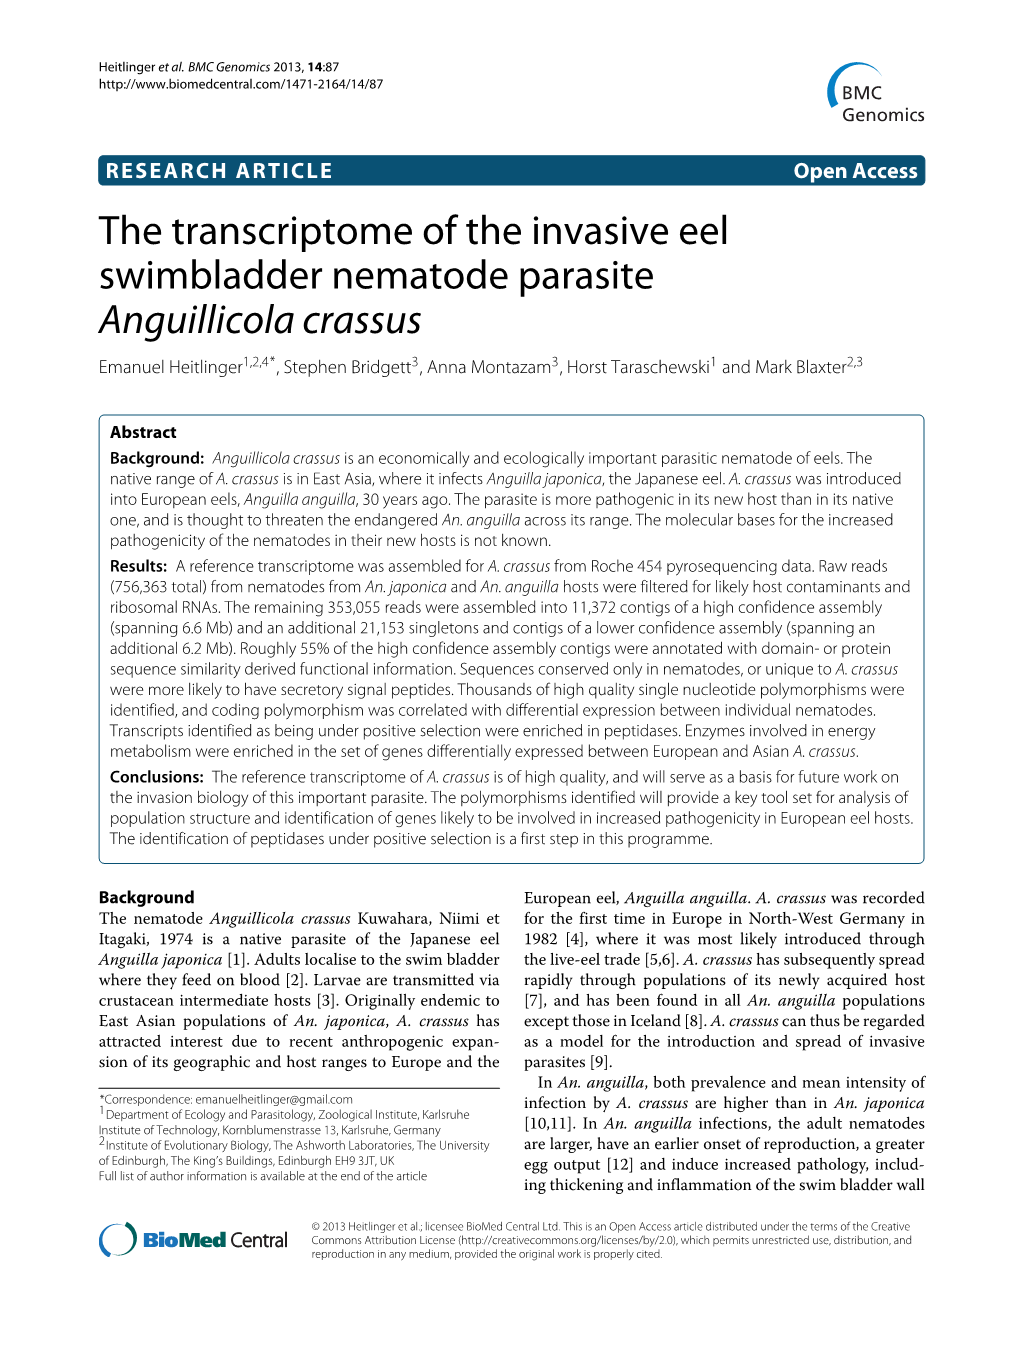 The Transcriptome of the Invasive Eel Swimbladder Nematode Parasite